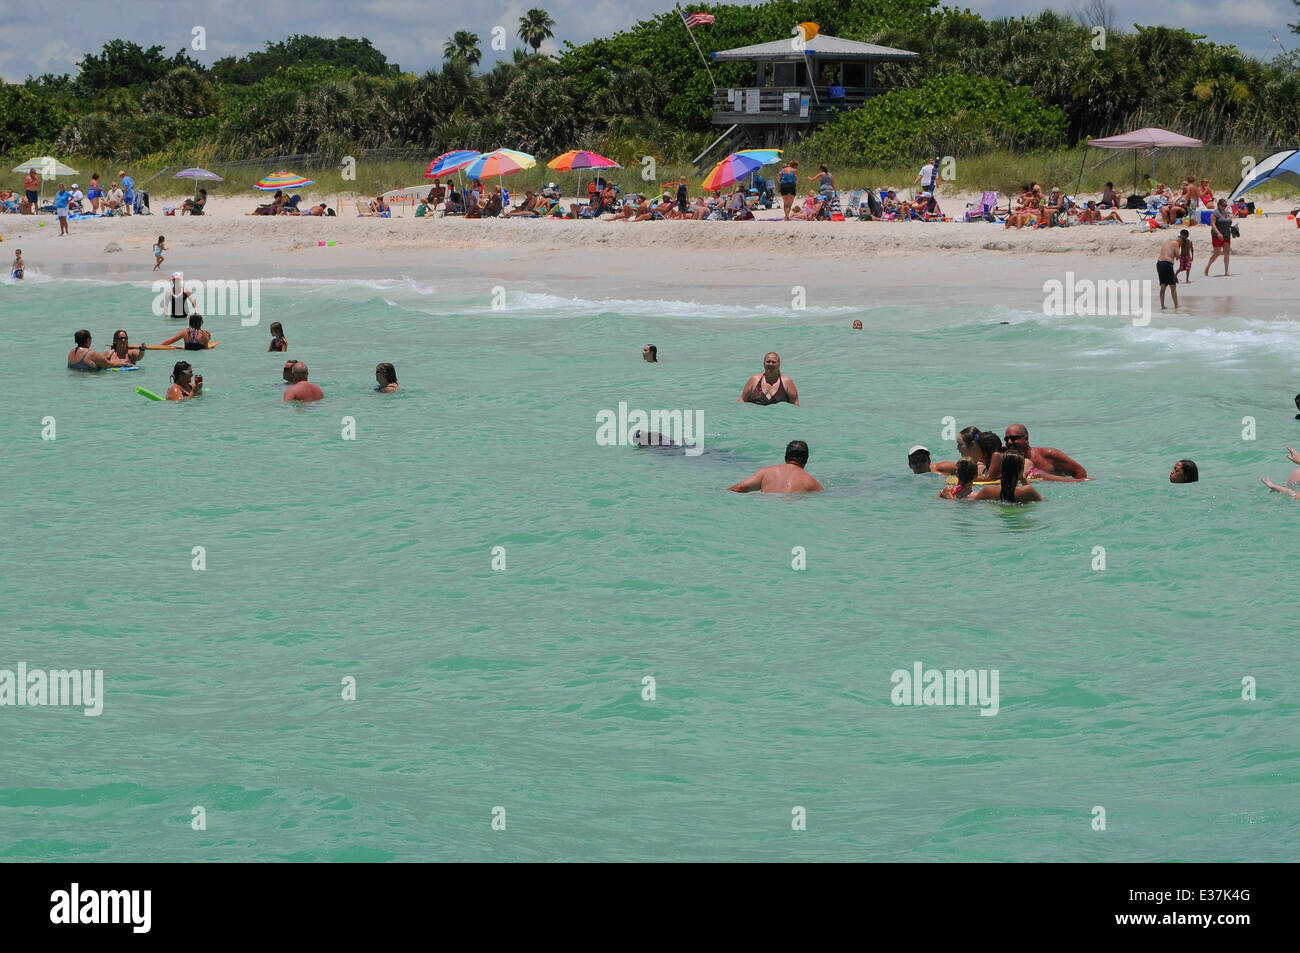 Nokomis Beach, Casey Key, Florida, USA. 22 June 2014. Manatee joins bathers in the warm waters off Nokomis beach as temperature rises to 92 degrees. David Burr/Alamy Live News Stock Photo